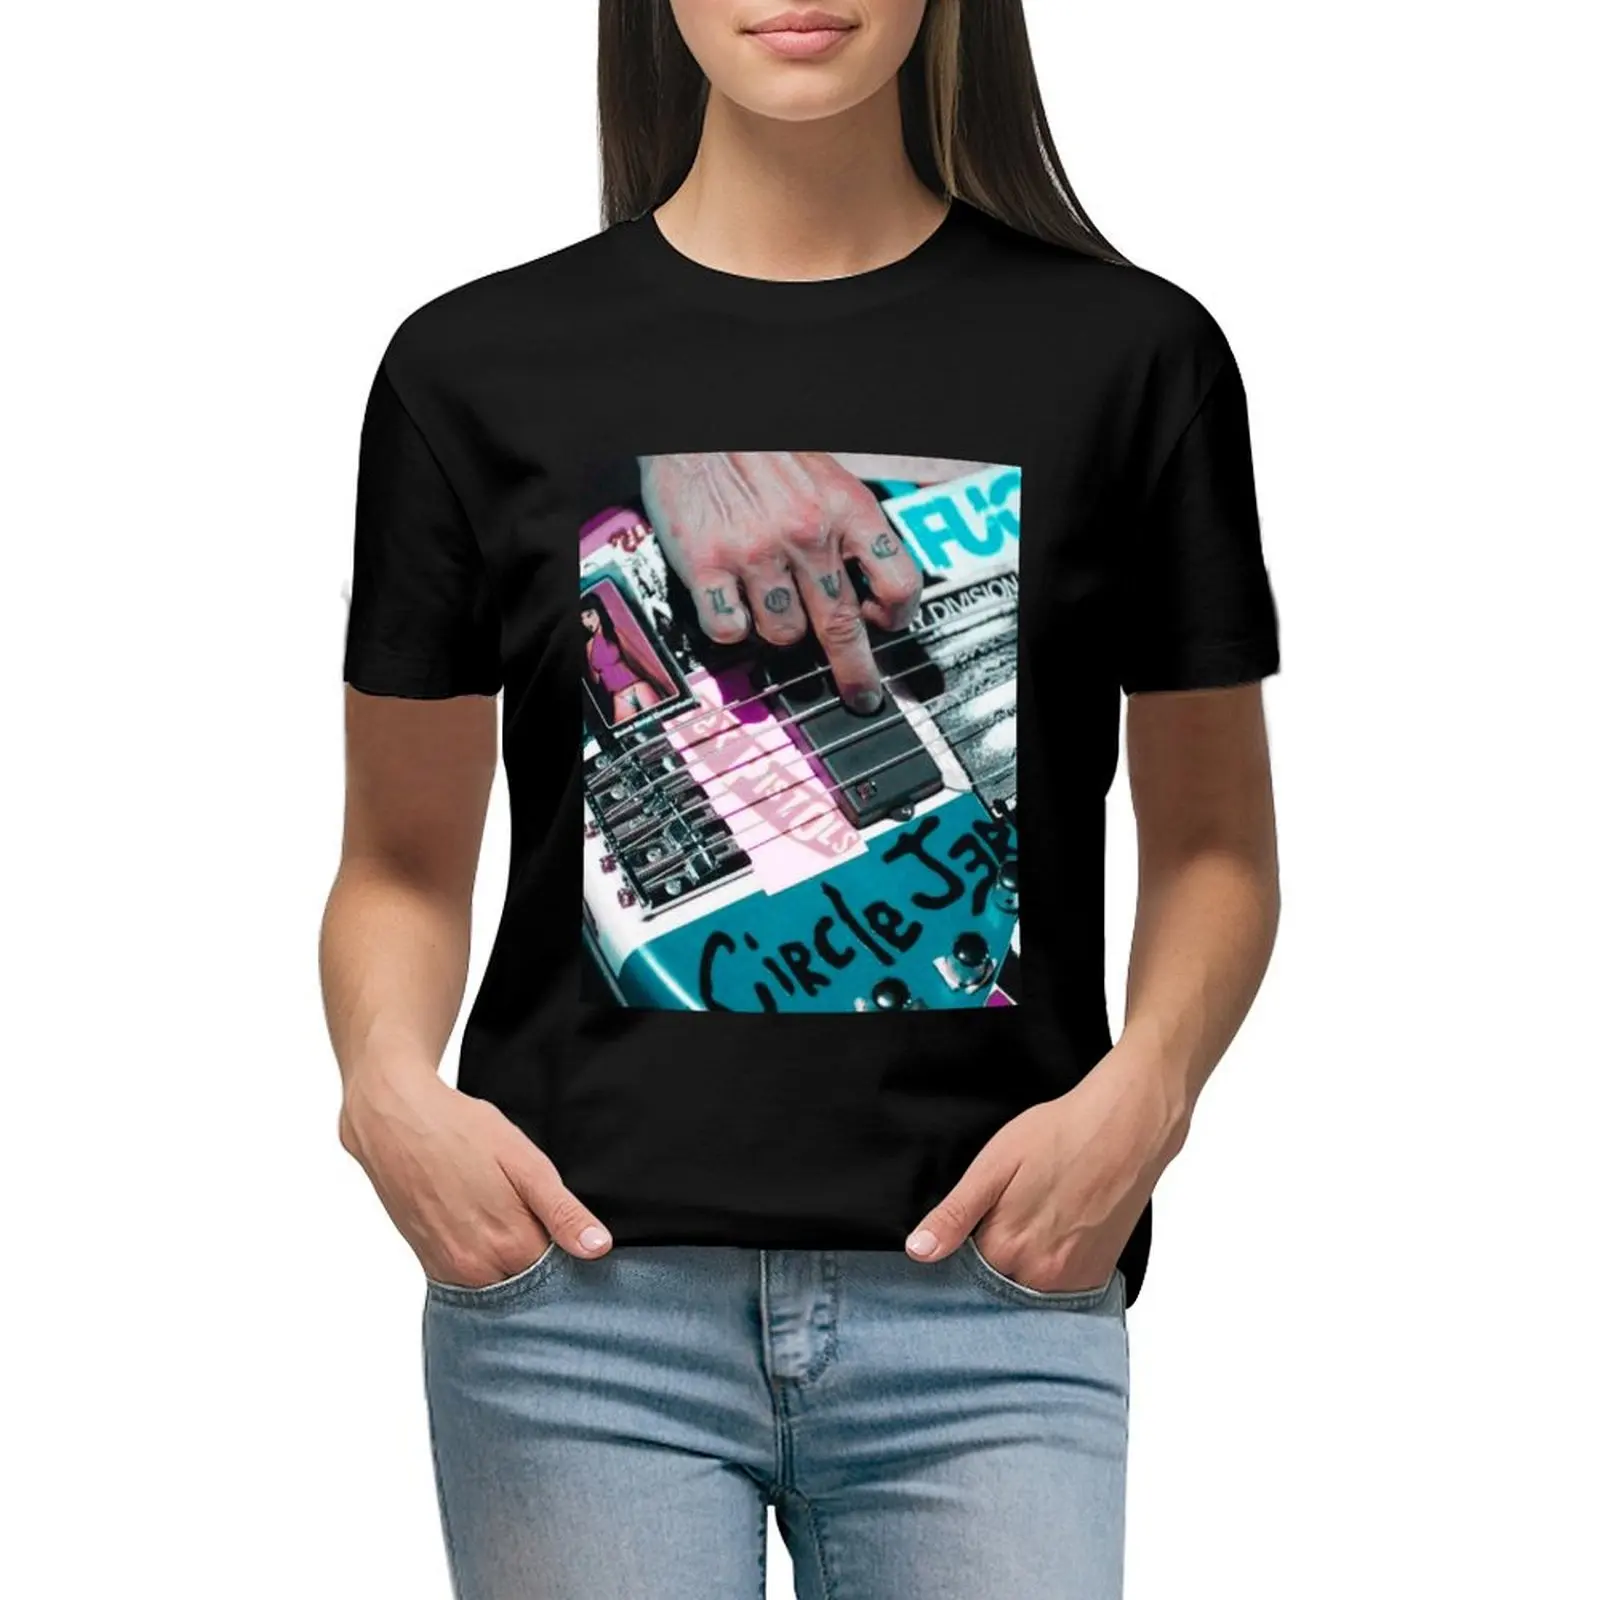 

Flea Bass RHCP T-shirt cute tops kawaii clothes t-shirts for Women graphic tees funny